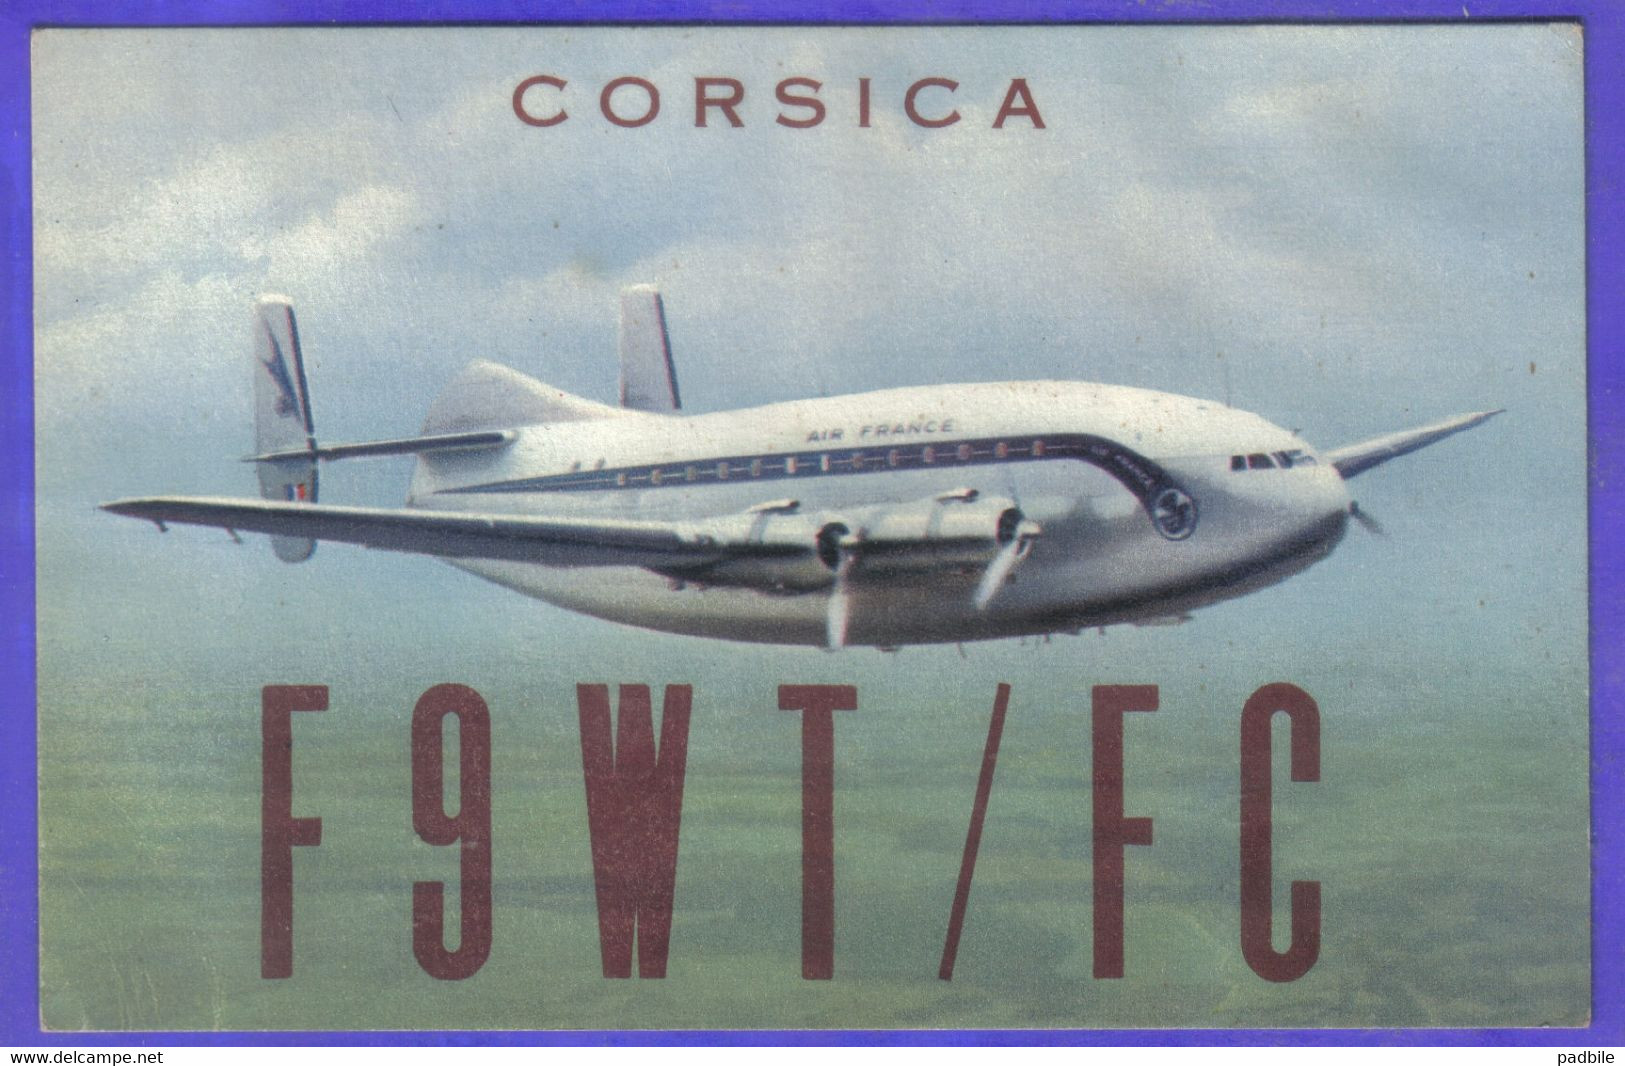 Carte Postale Avion Breguet  "Provence" Air France  Corsica Radio Amateur    Très Beau Plan - 1946-....: Modern Era